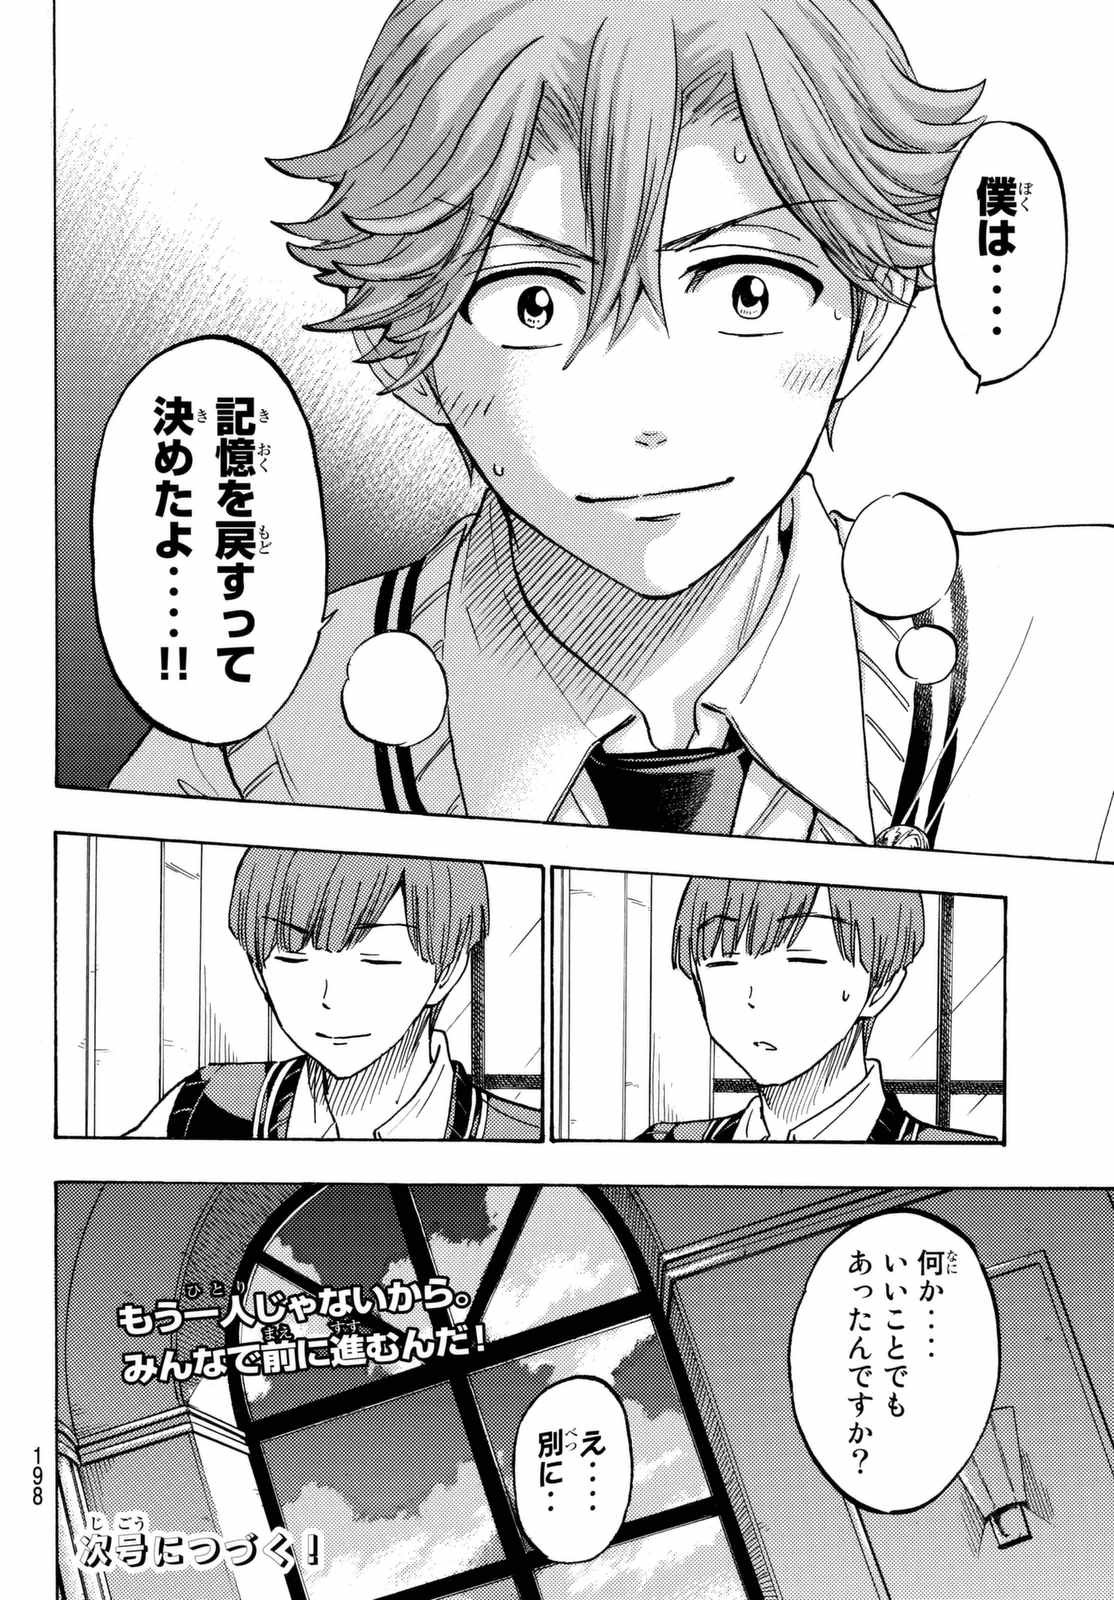 Yamada-kun to 7-nin no Majo - Chapter 214 - Page 20